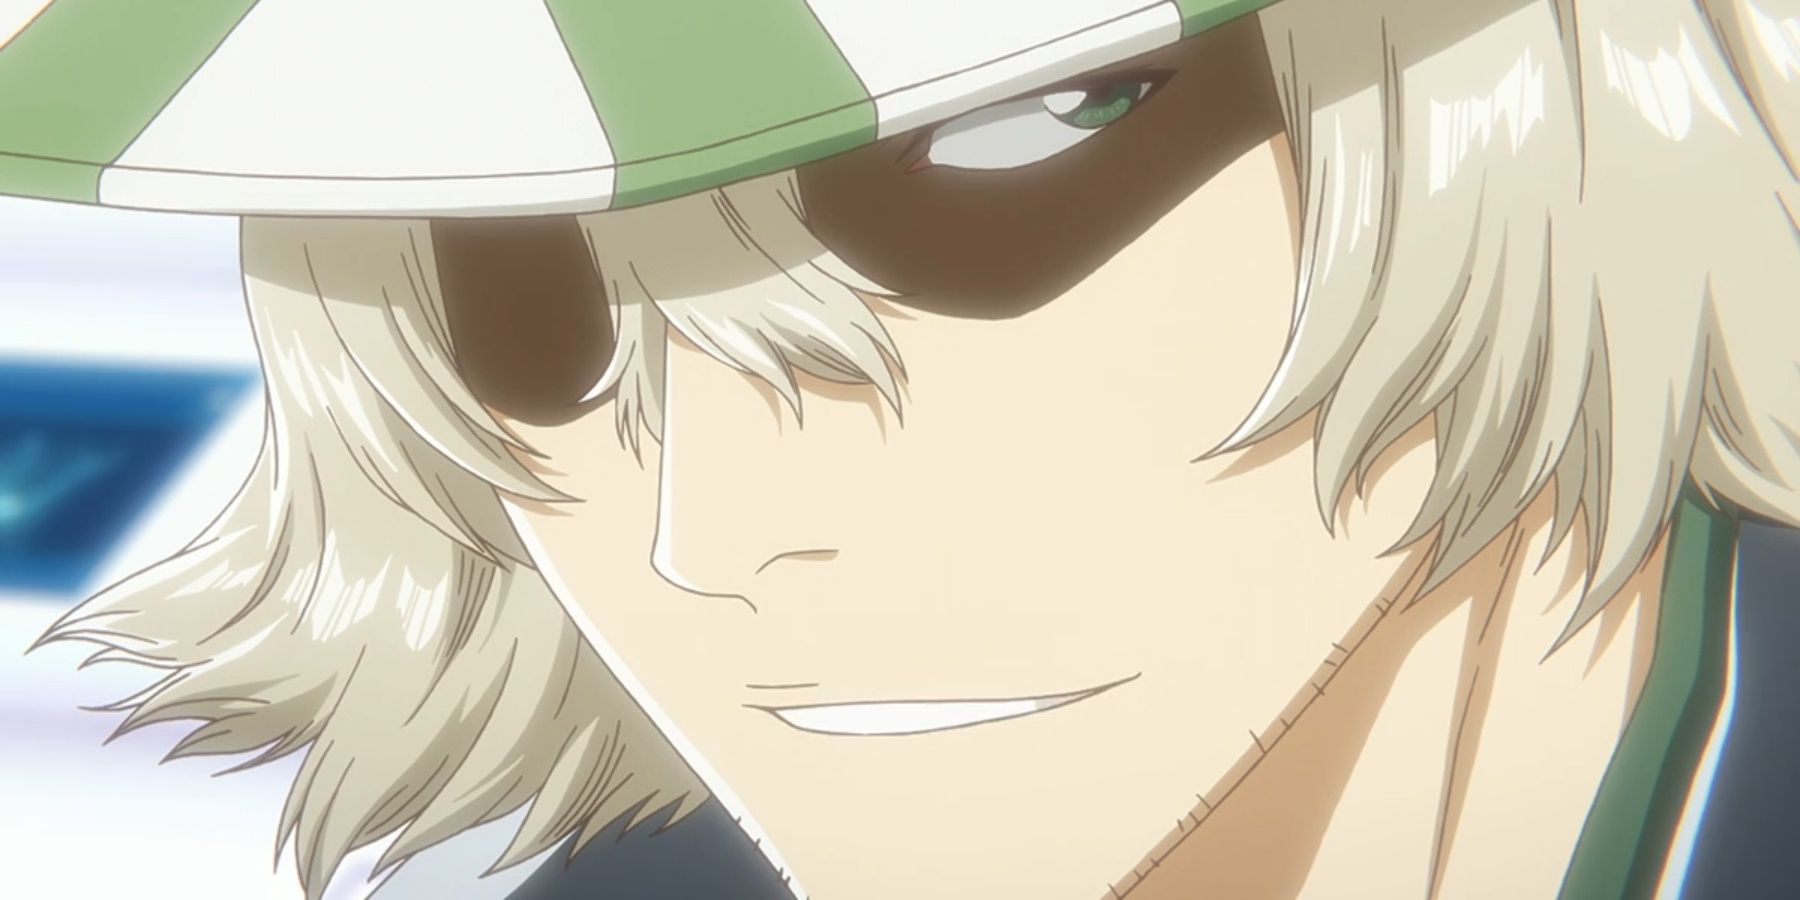 Kisuke Urahara grins in Bleach anime.